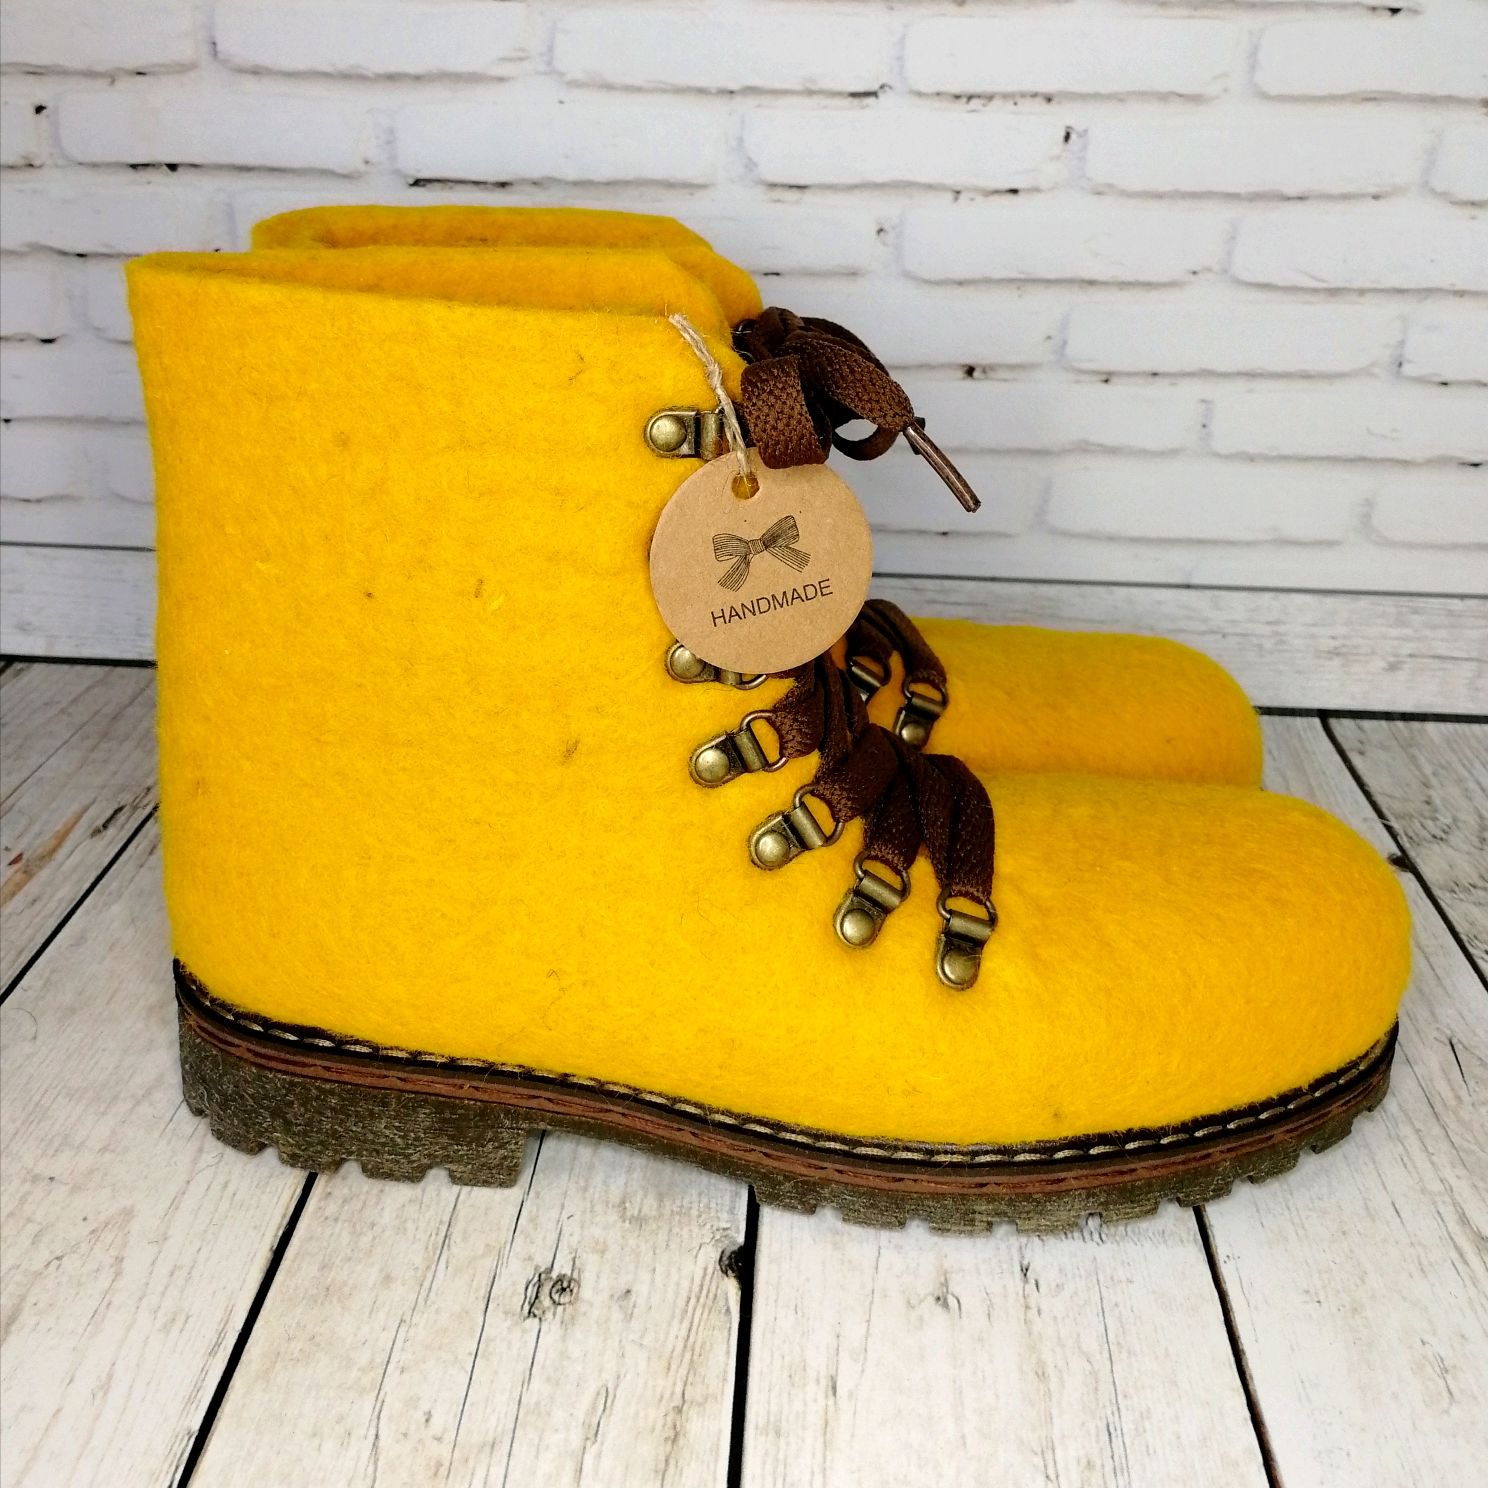 Желтые зимние ботинки